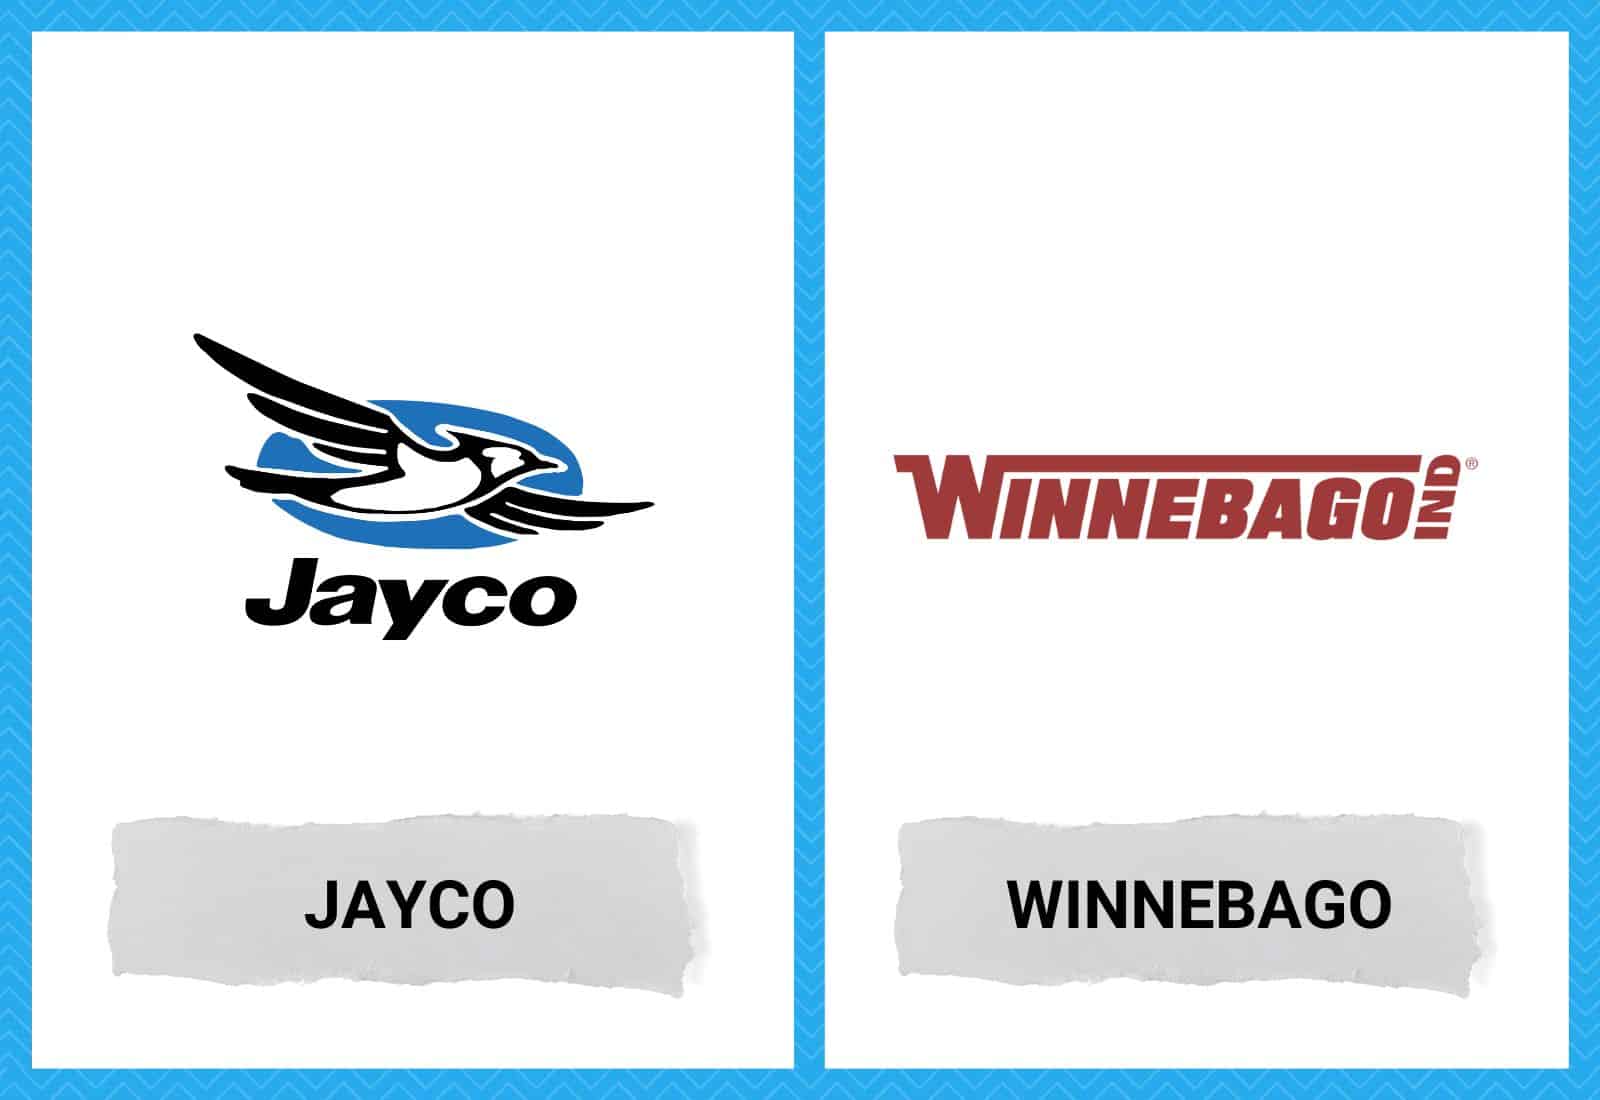 Jayco vs Winnebago